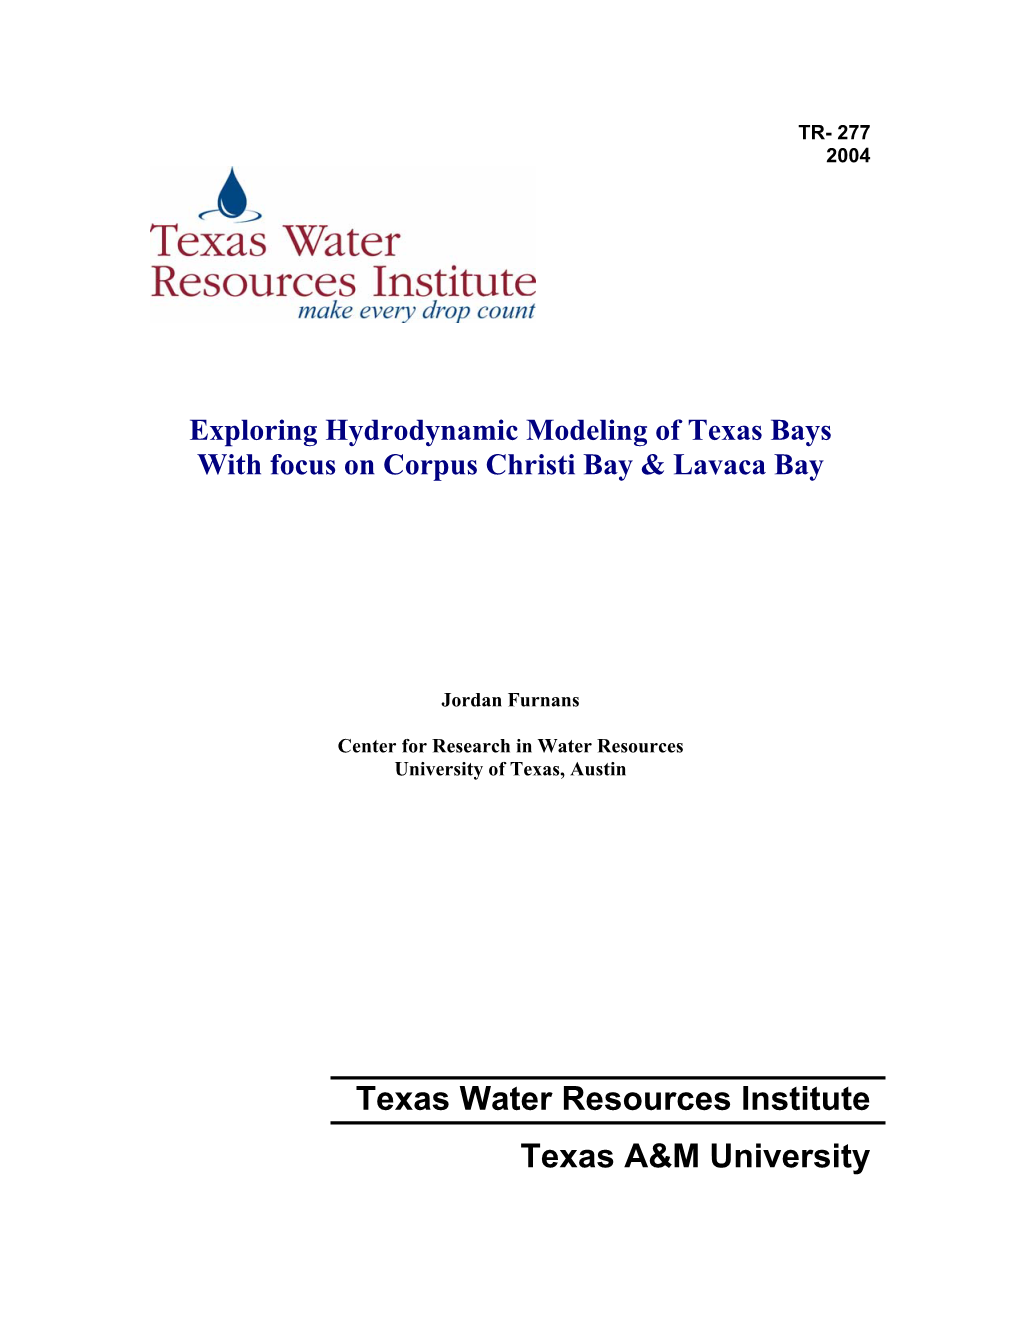 Exploring Hydrodynamic Modeling of Texas Bays with Focus on Corpus Christi Bay & Lavaca Bay